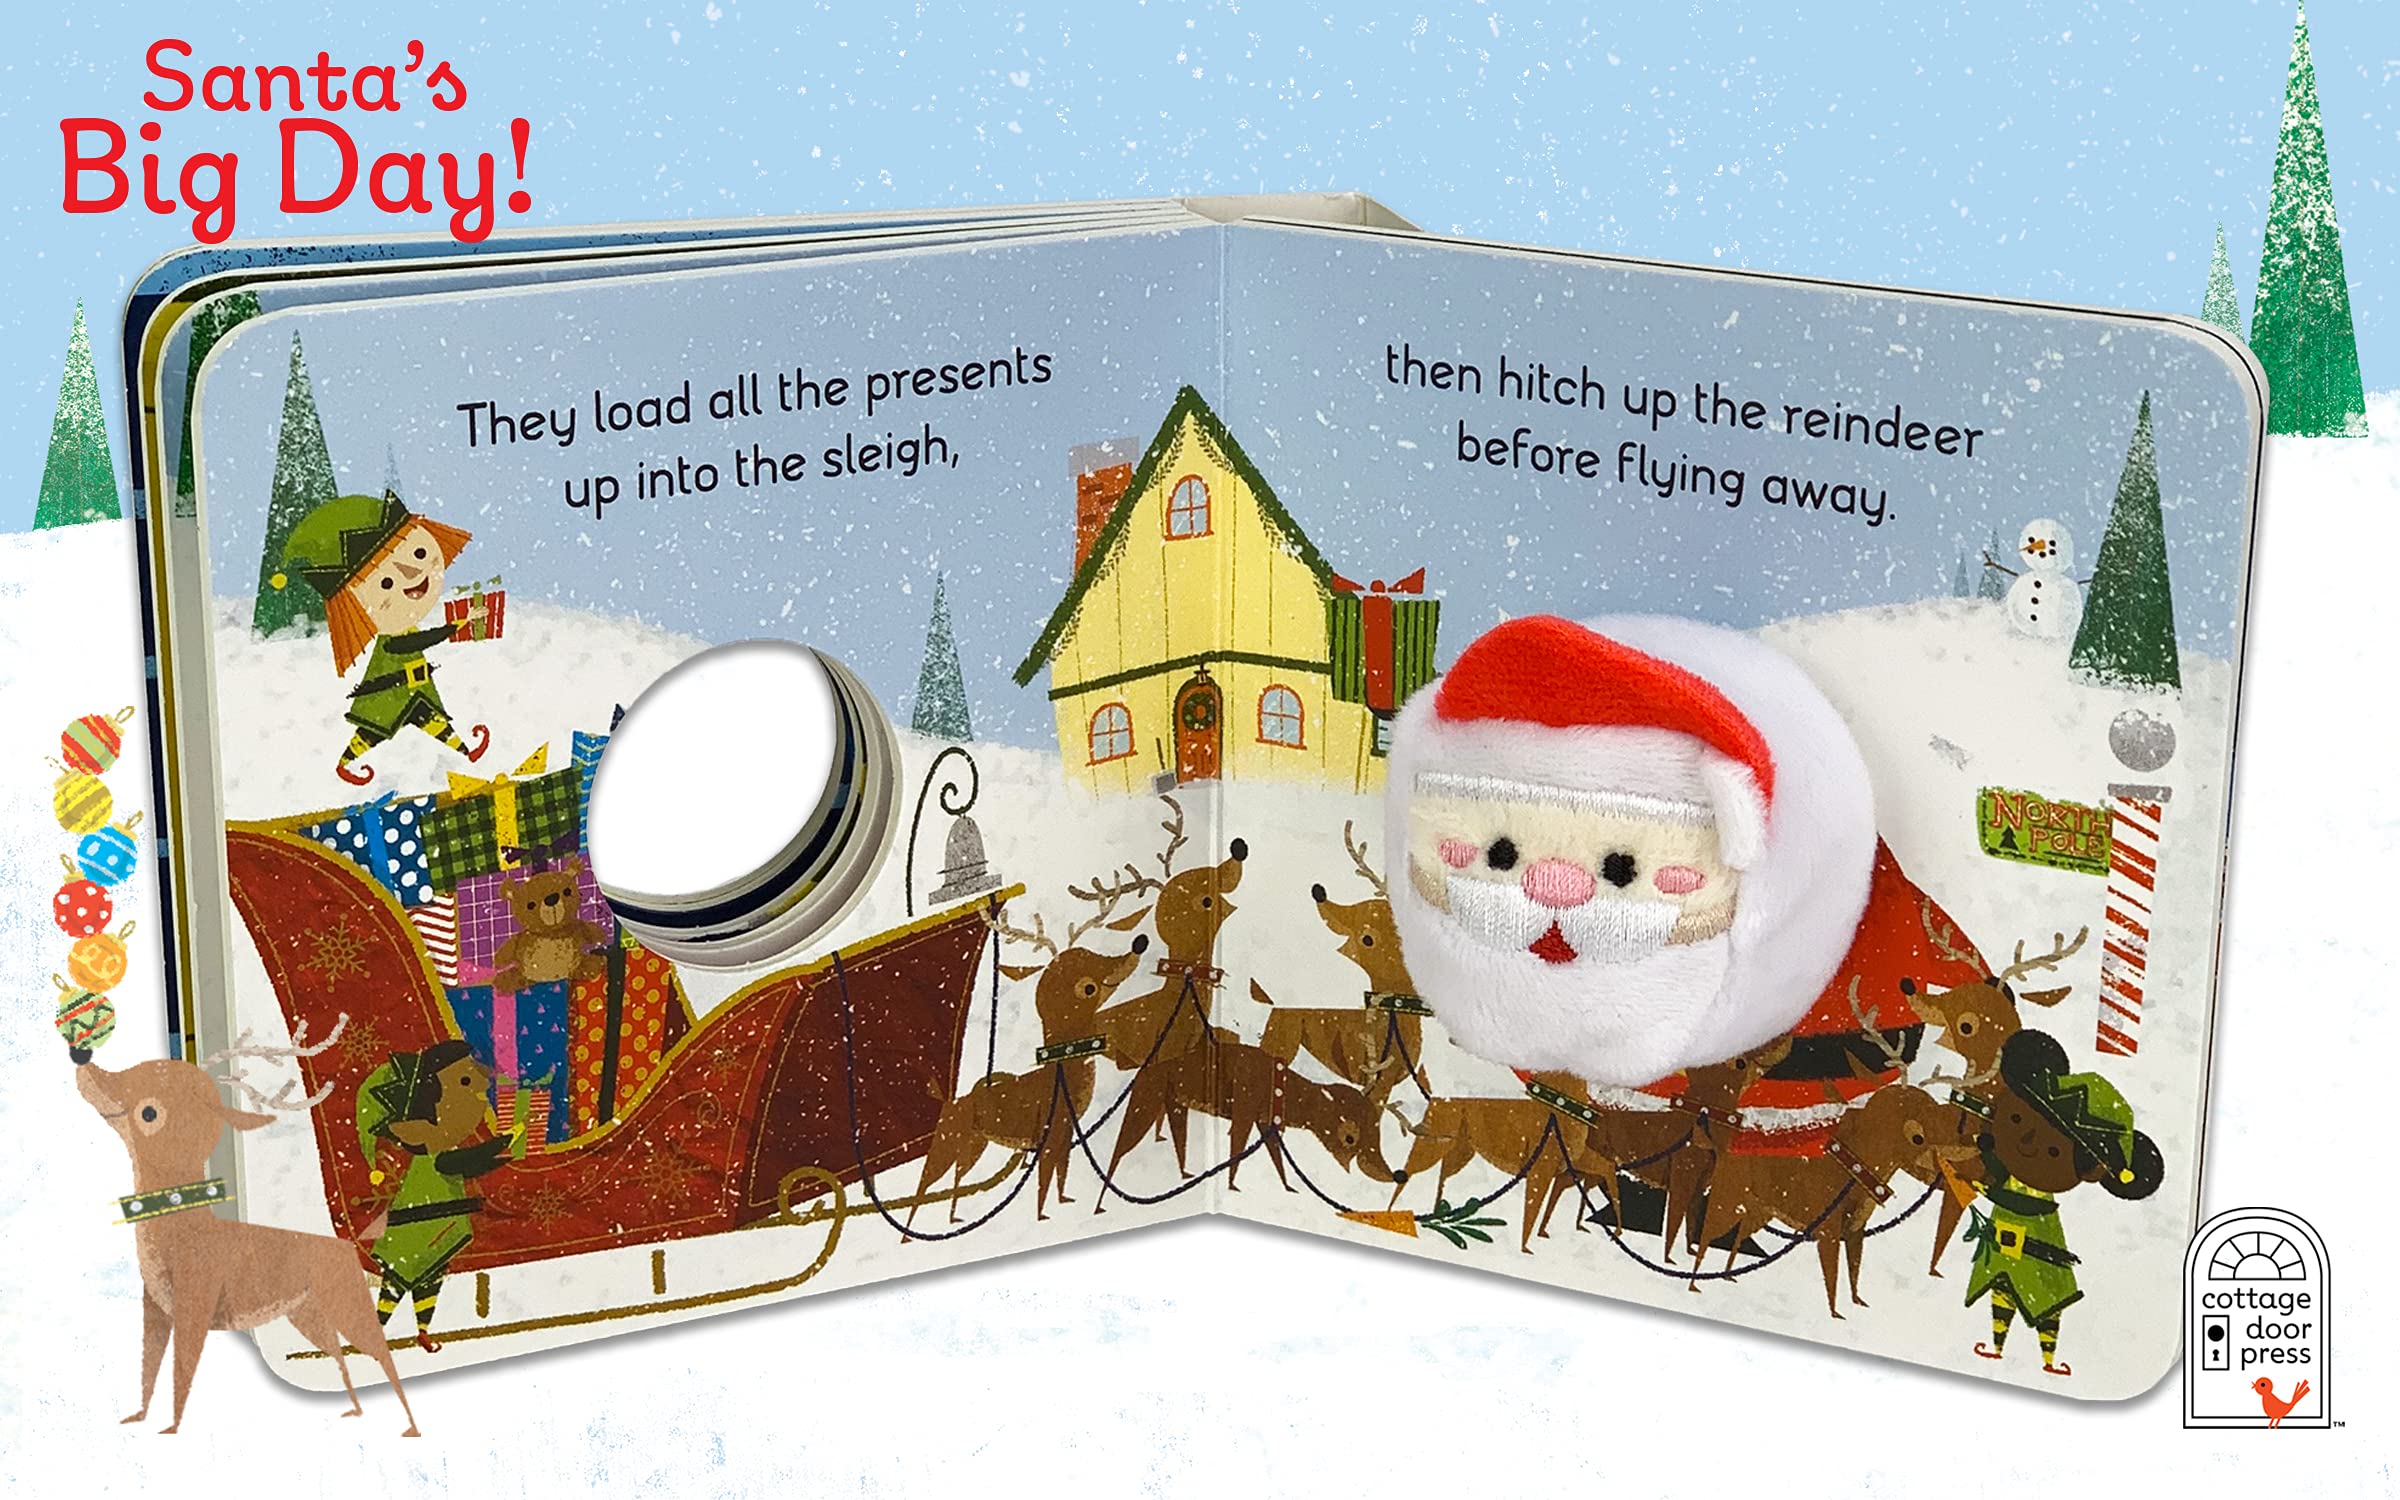 Santa's Big Day Finger Puppet Christmas Board Book Ages 0-4 (Finger Puppet Board Book)